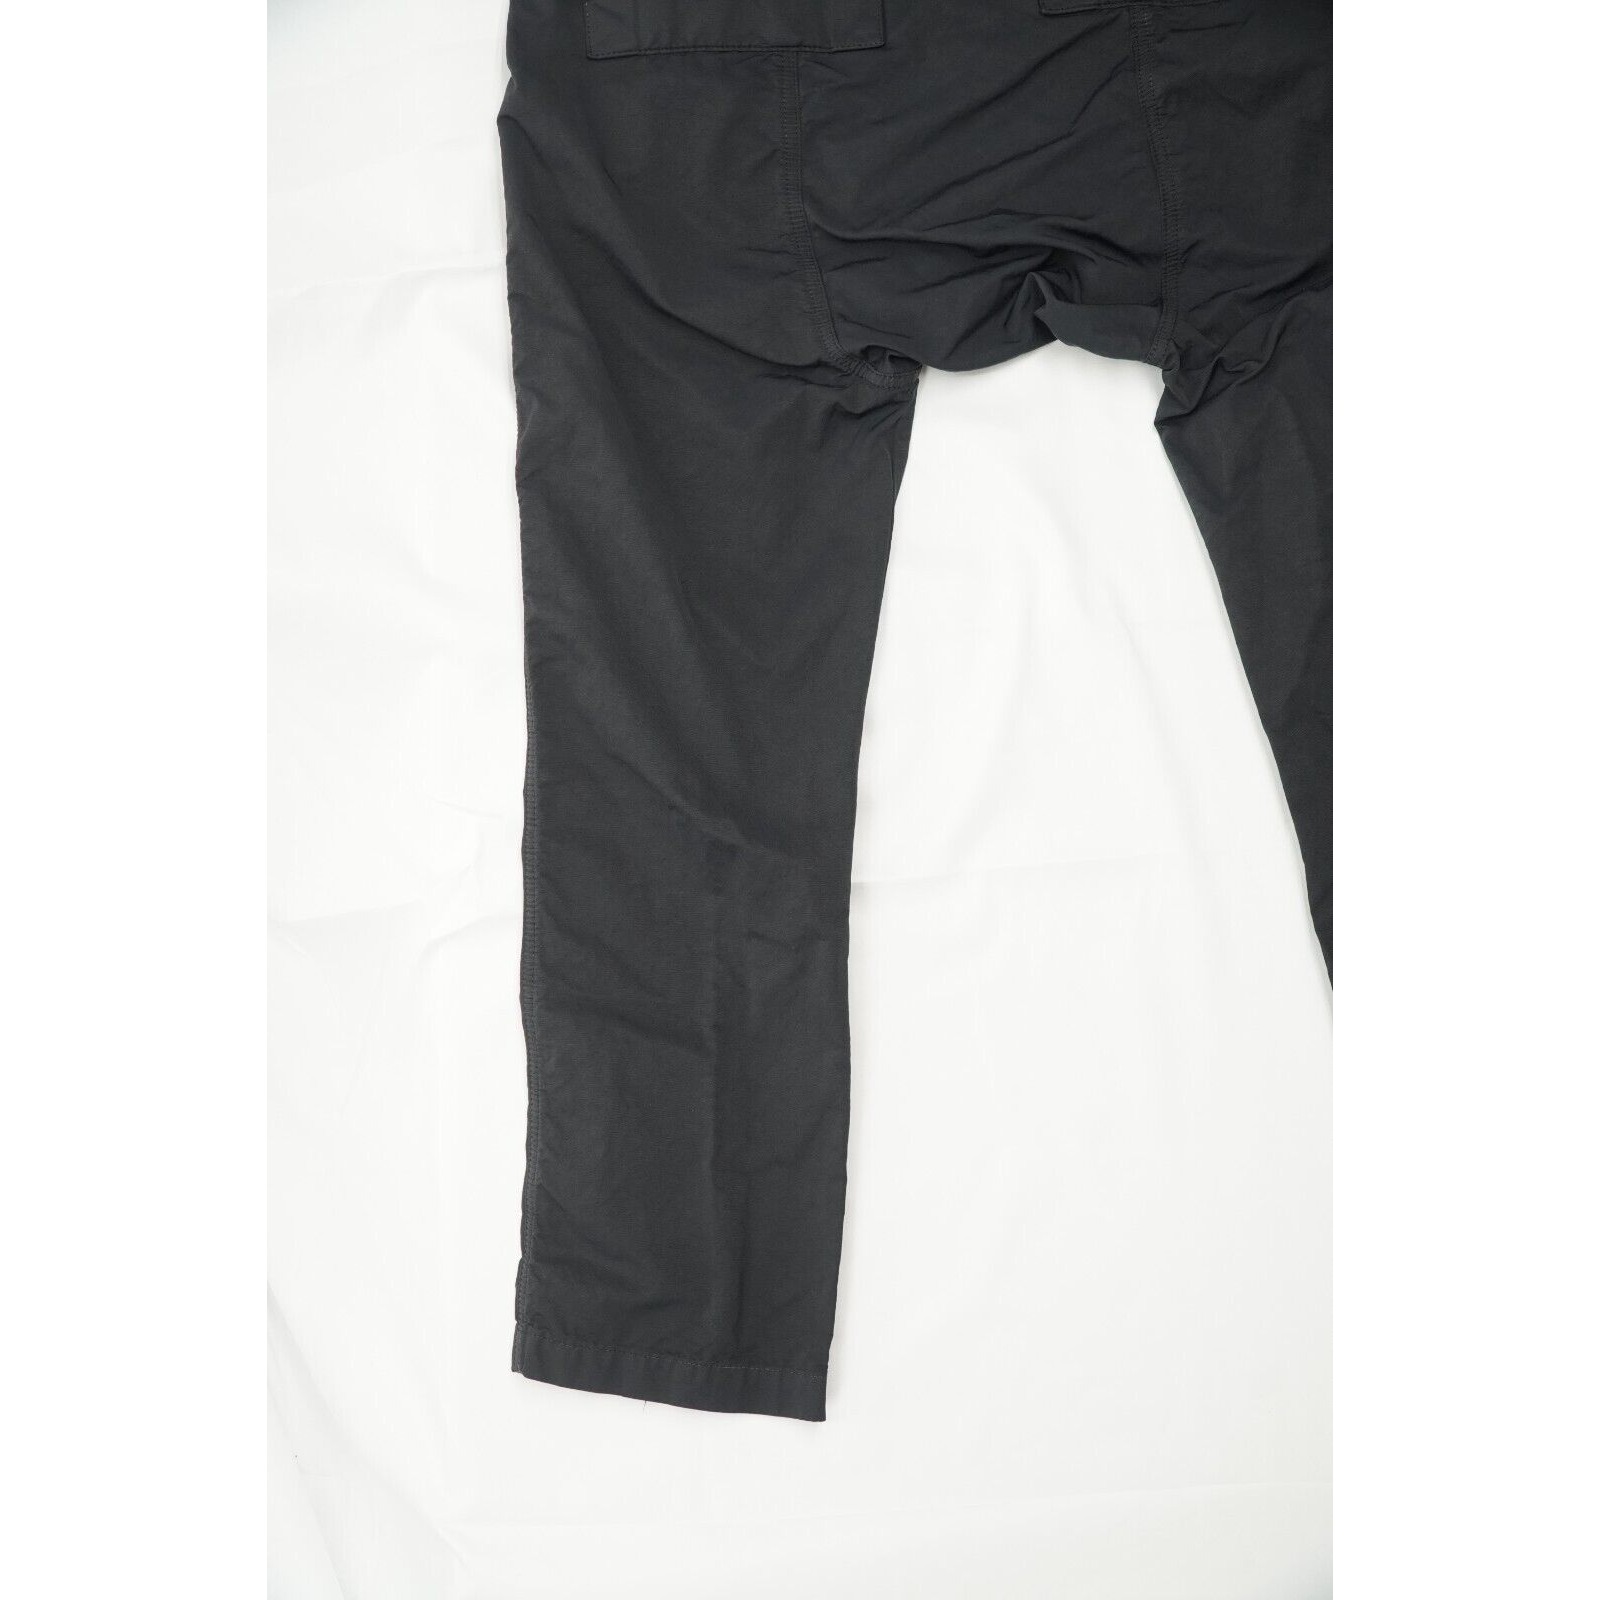 Black Lounge Pants Elastic Drawstring Drop Crotch Large - 9